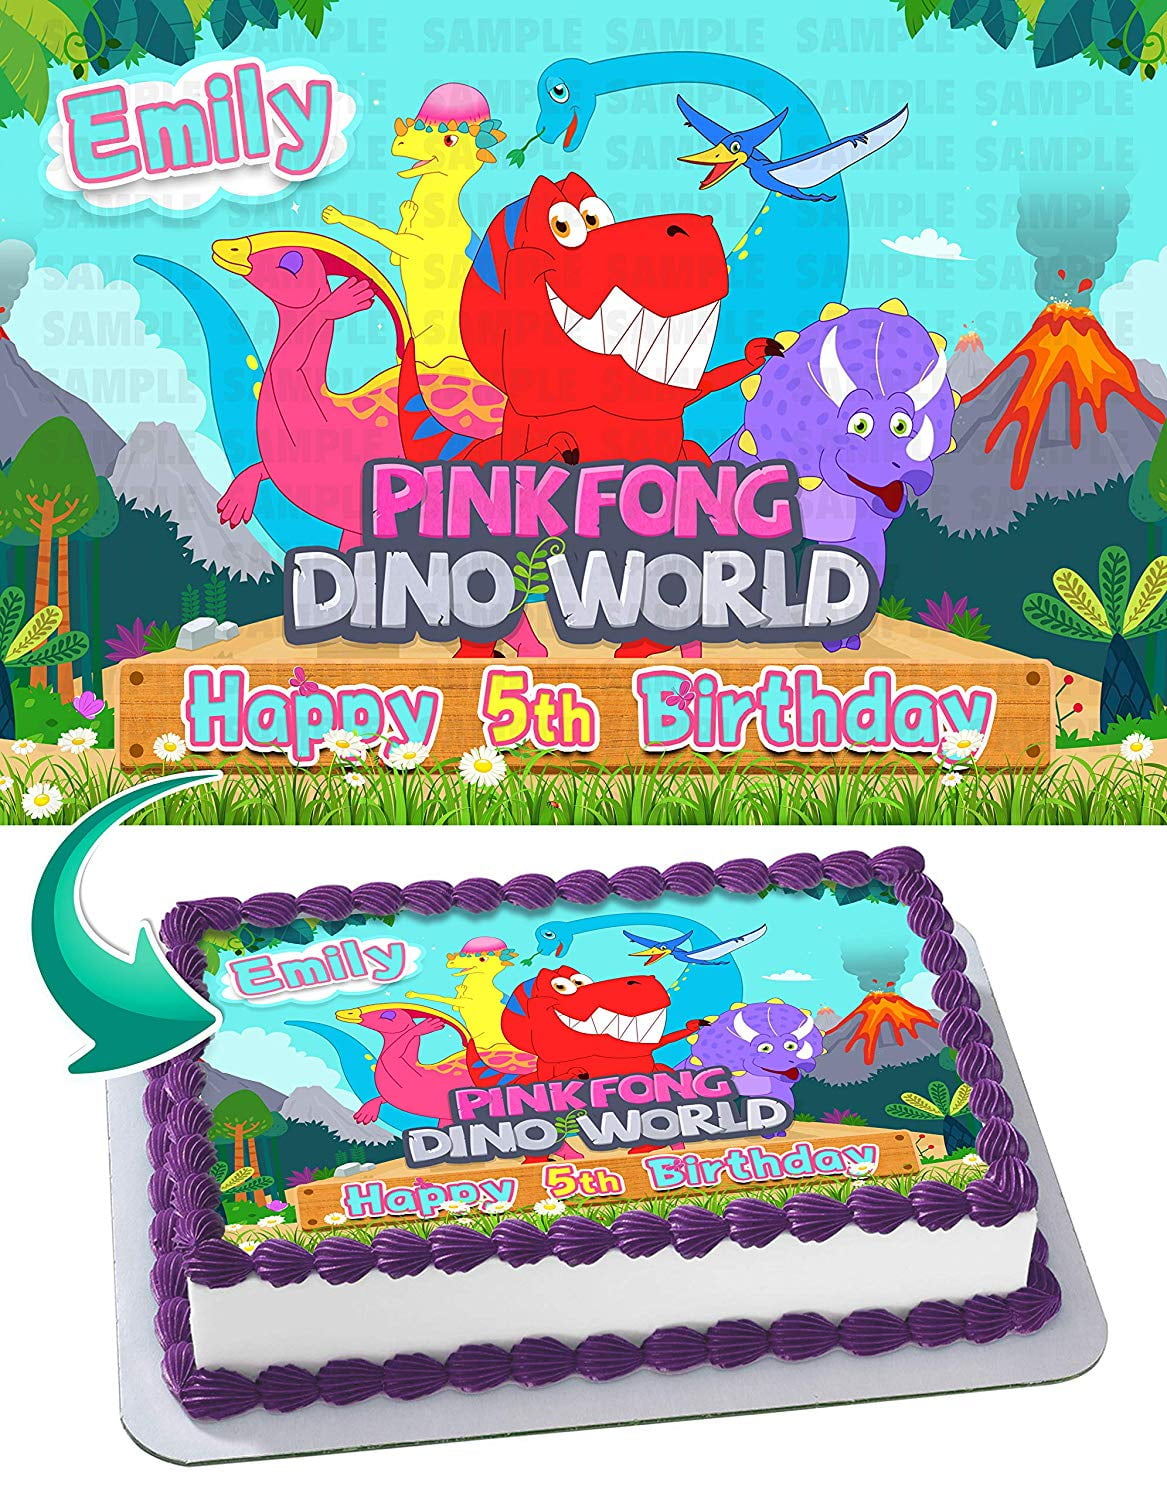 Piped Dinosaur Sheet Cake and Smash Cake — Trefzger's Bakery